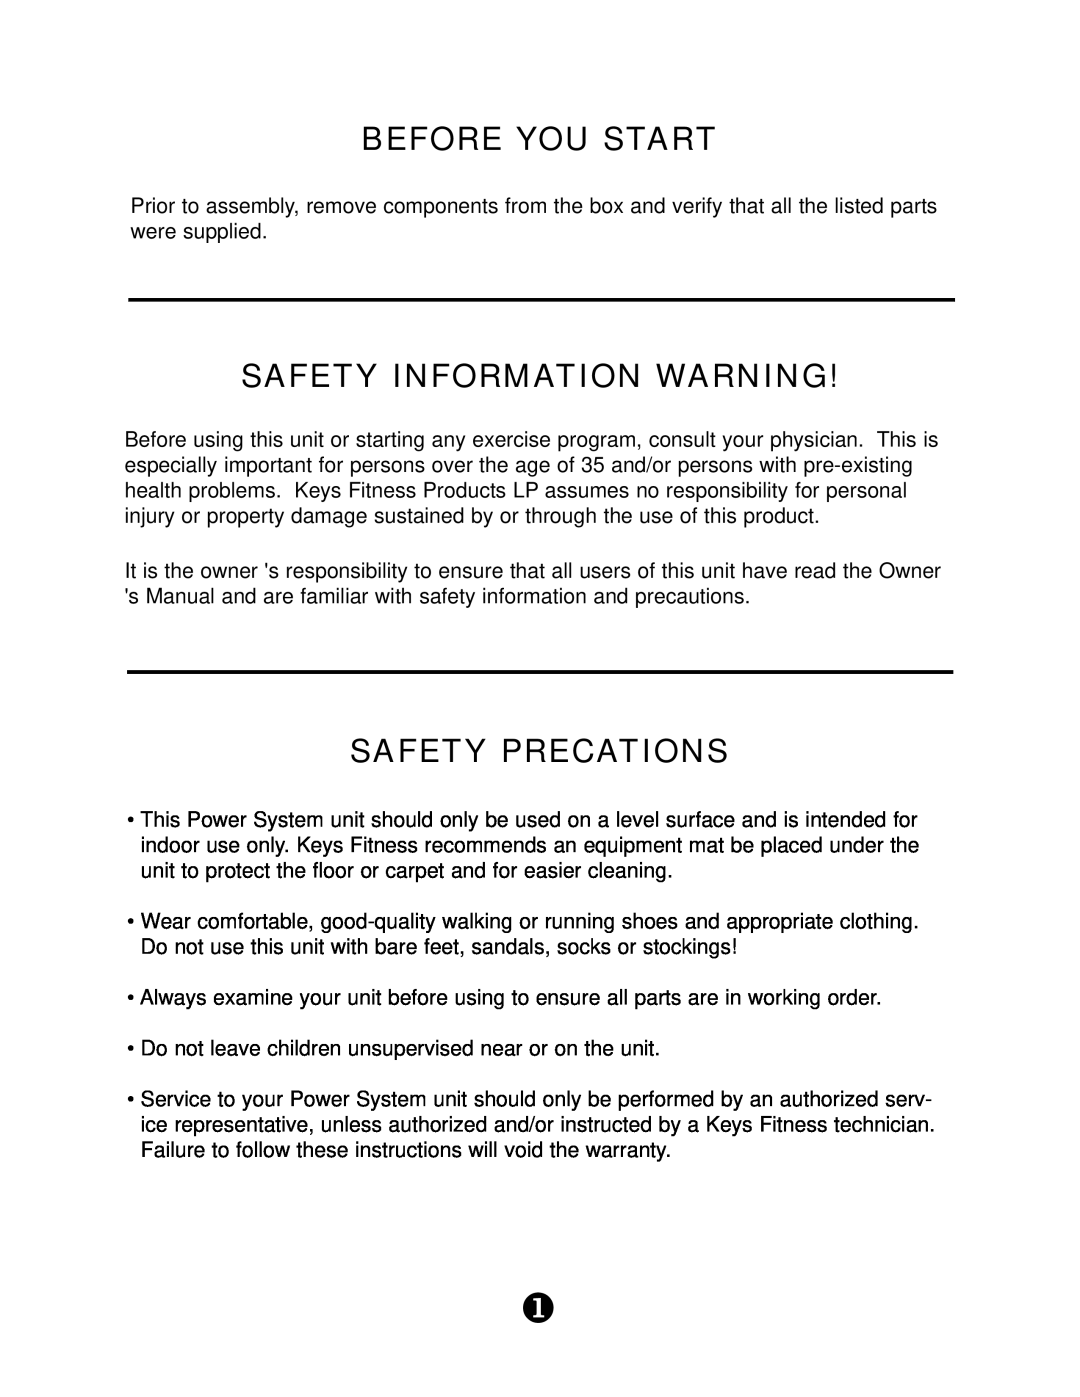 Keys Fitness KPS-PT manual Before You Start, Safety Information Warning, Safety Precations 